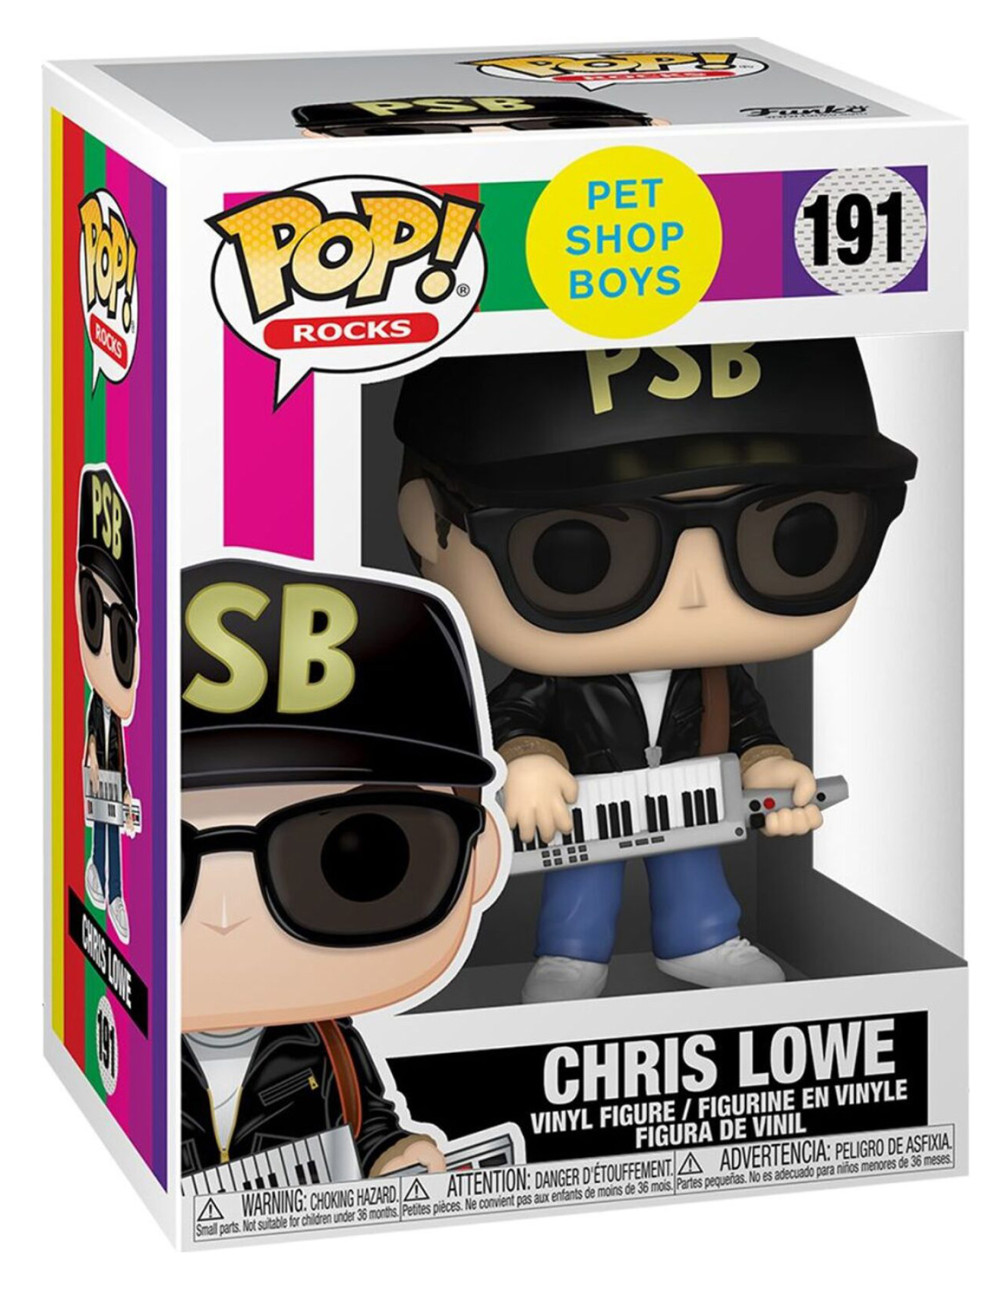  Funko POP Rocks: Pet Shop Boys – Chris Lowe (9,5 )